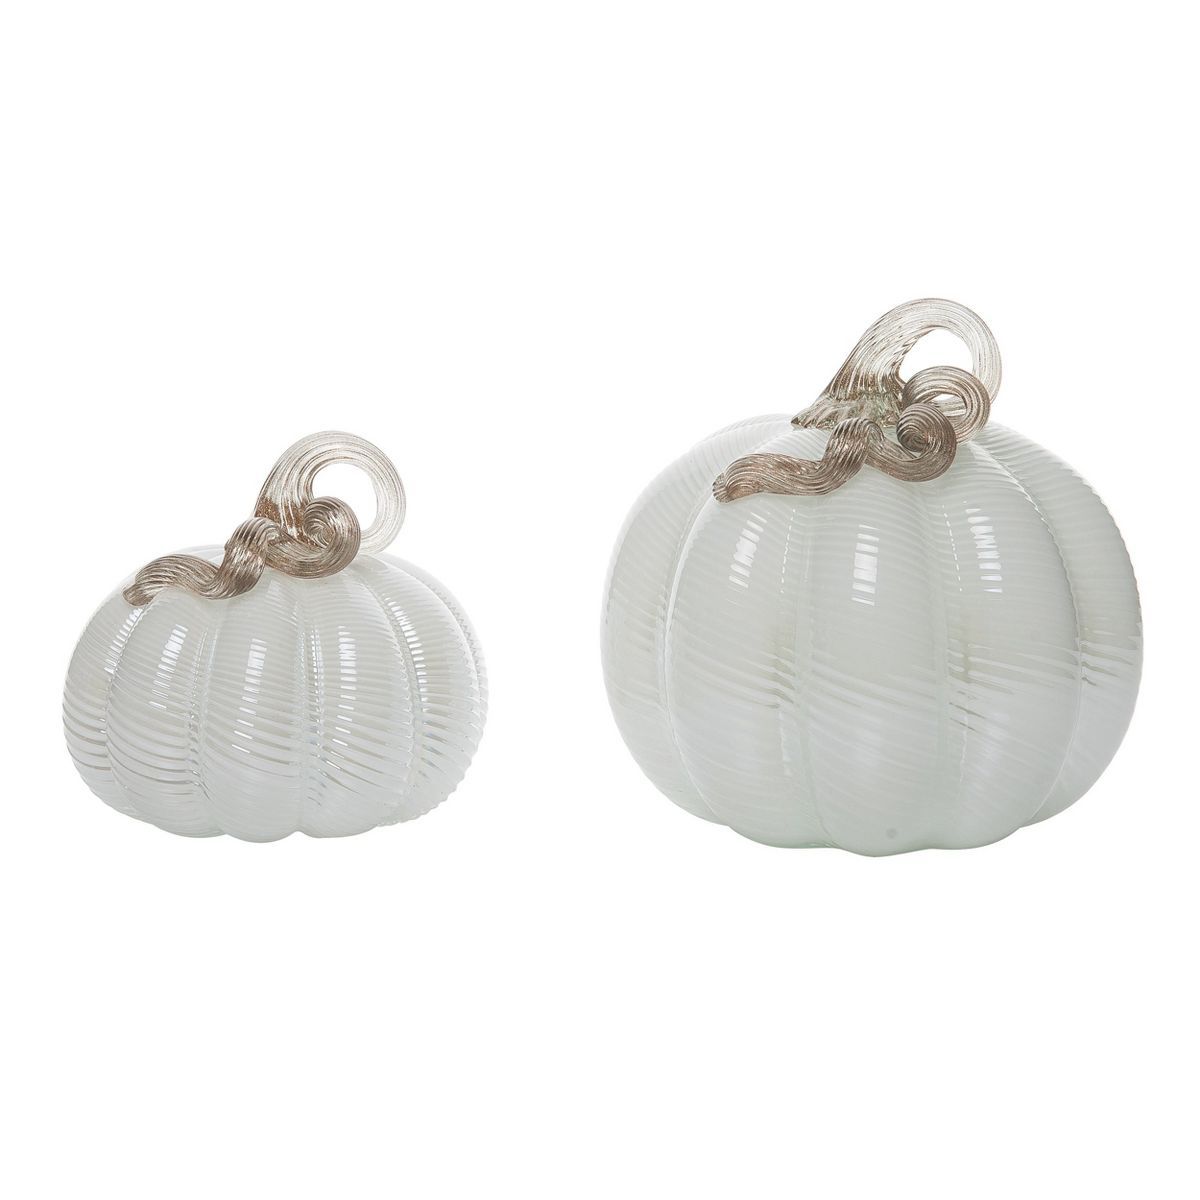 Transpac Glass 7.5 in. White Harvest Iridescent Swirl Pumpkins Set of 2 | Target